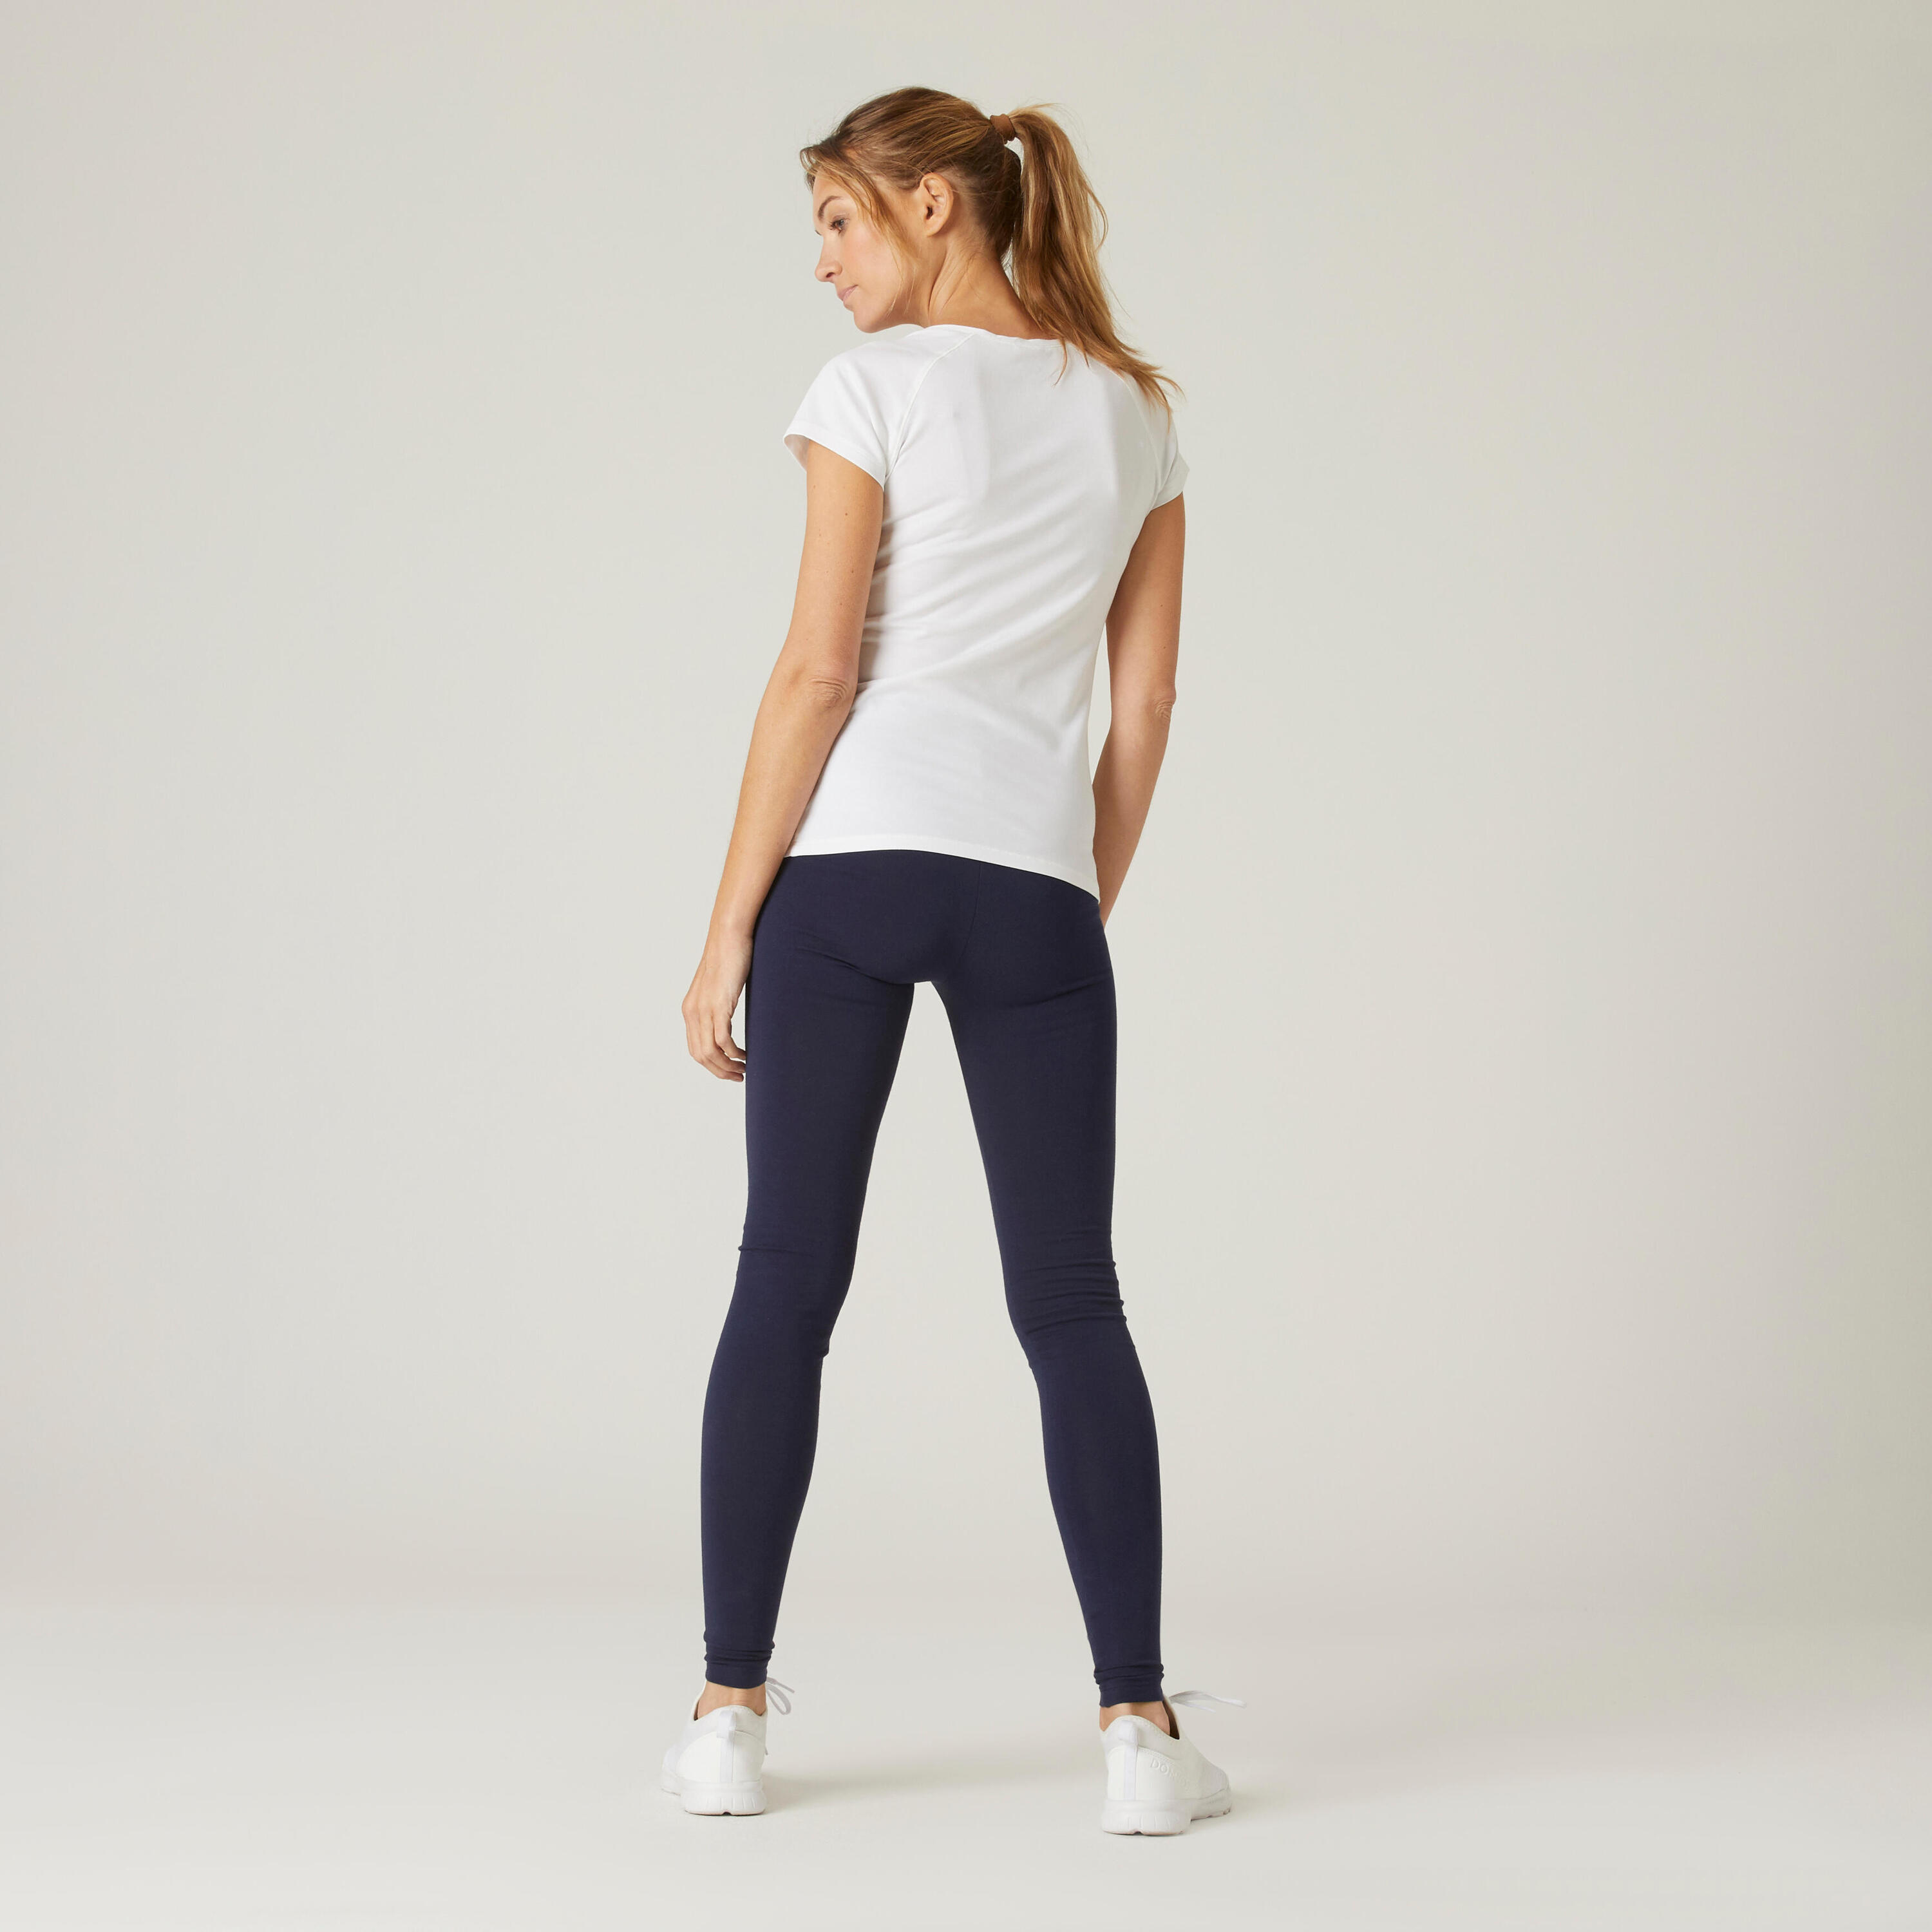 Women's Slim-Fit Fitness Leggings Fit+ 500 - Navy Blue DOMYOS